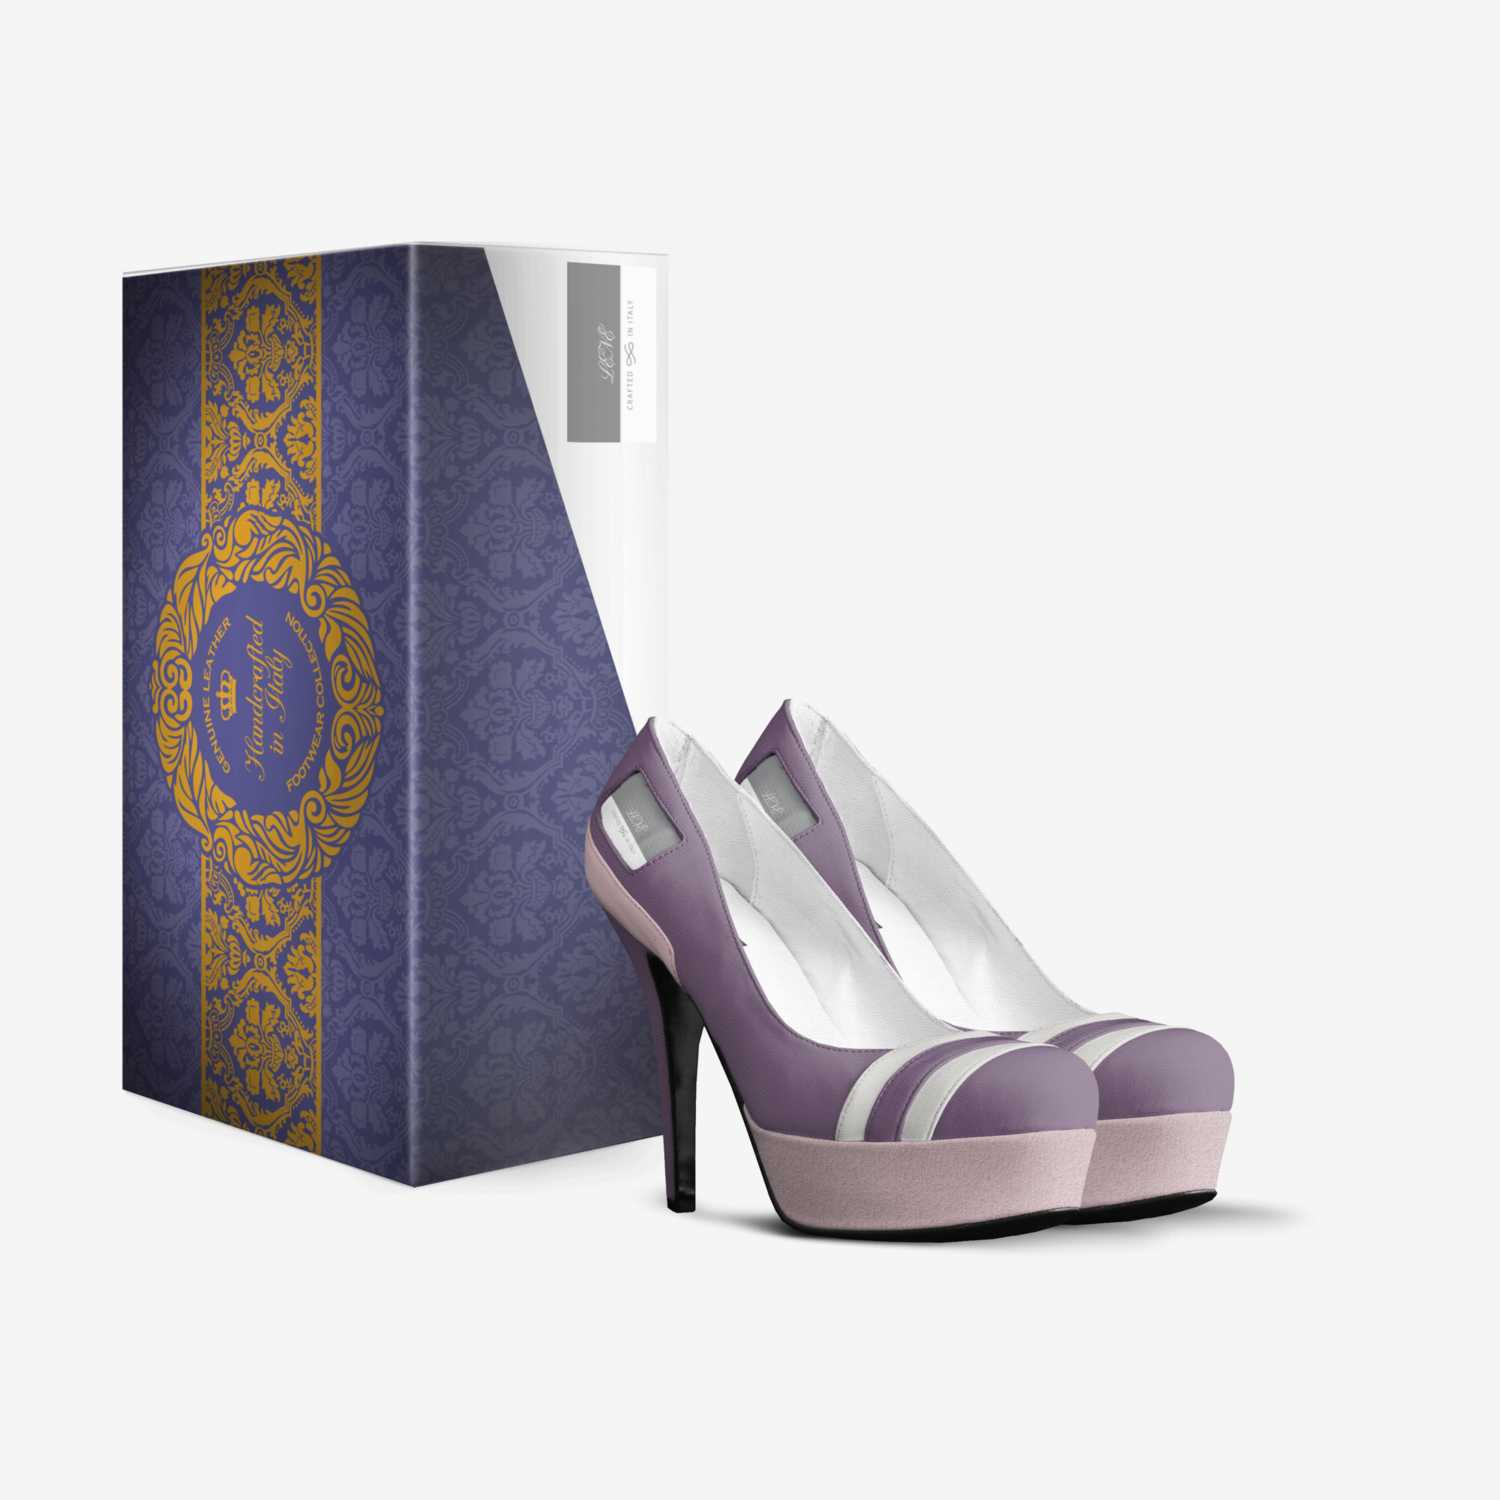 LENE custom made in Italy shoes by Arlene L Graves | Box view